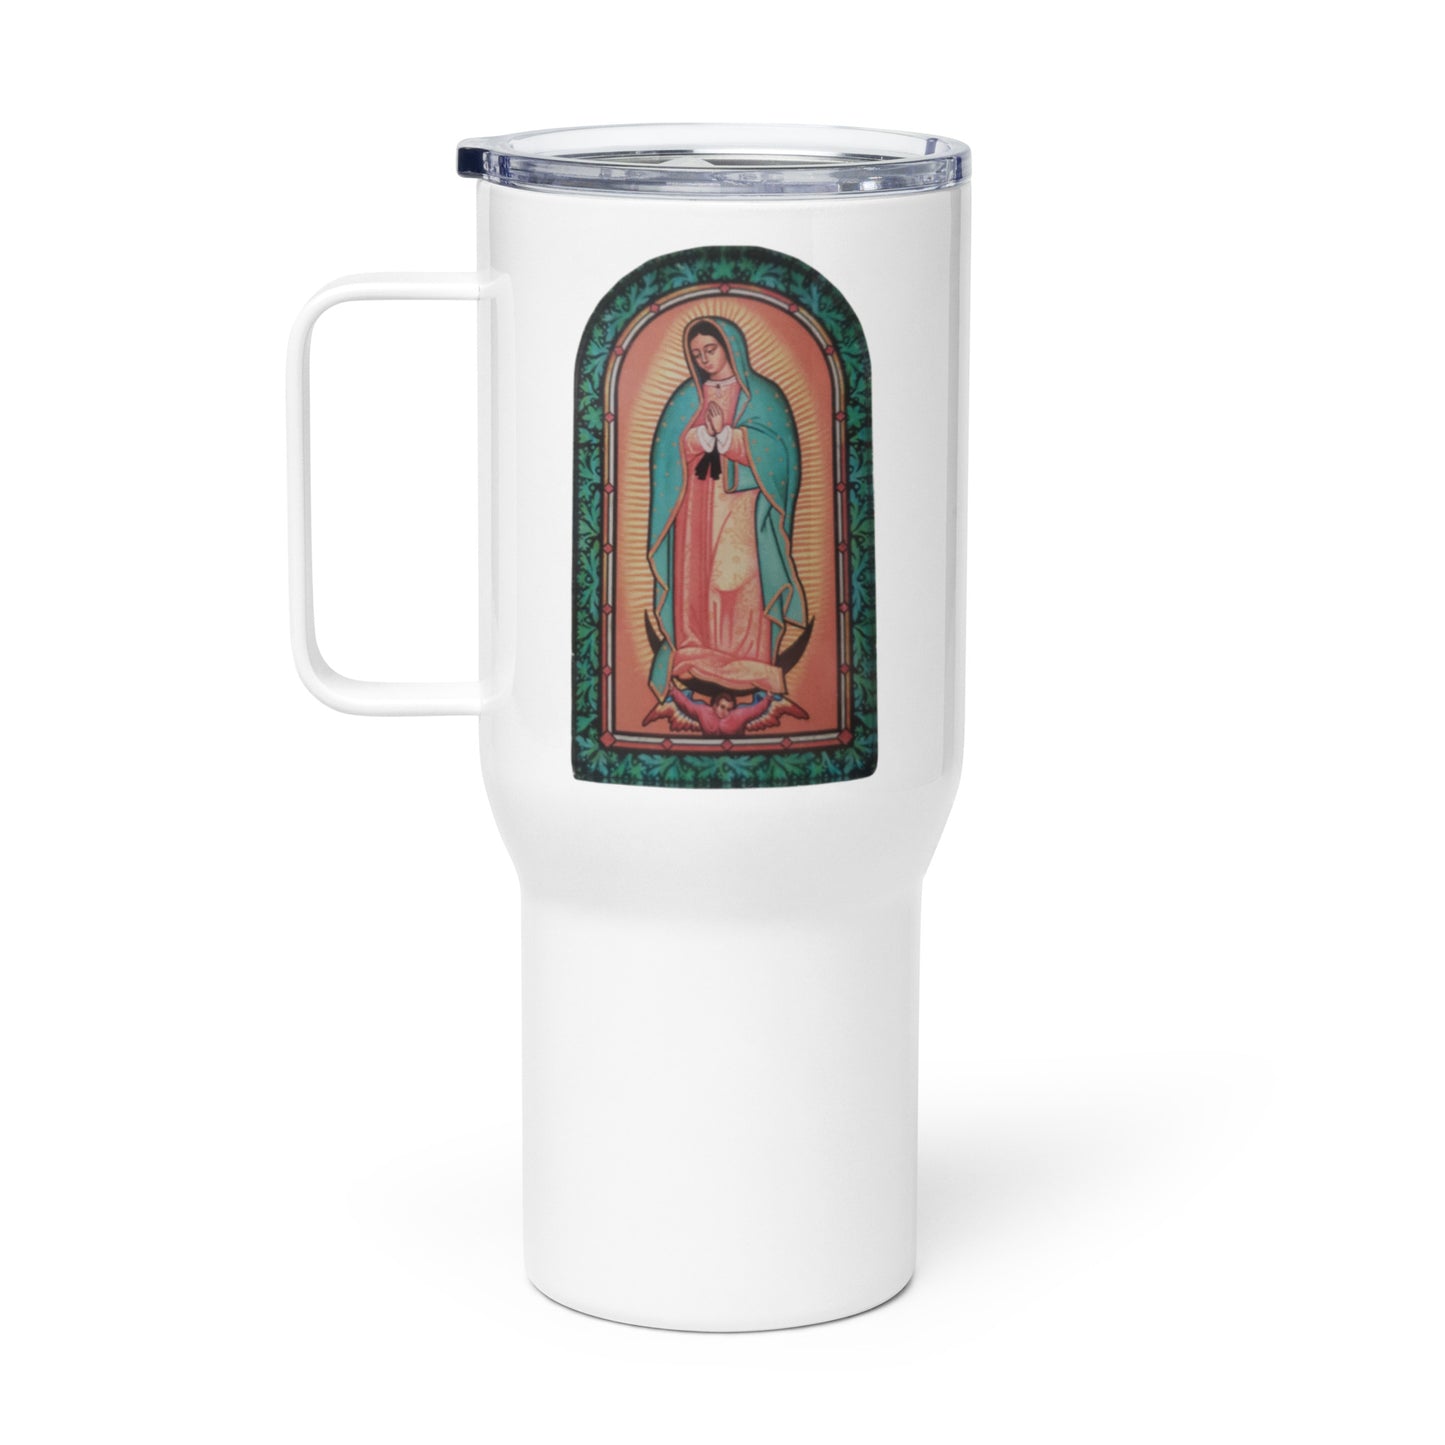 Our Lady of Guadalupe Travel Mug